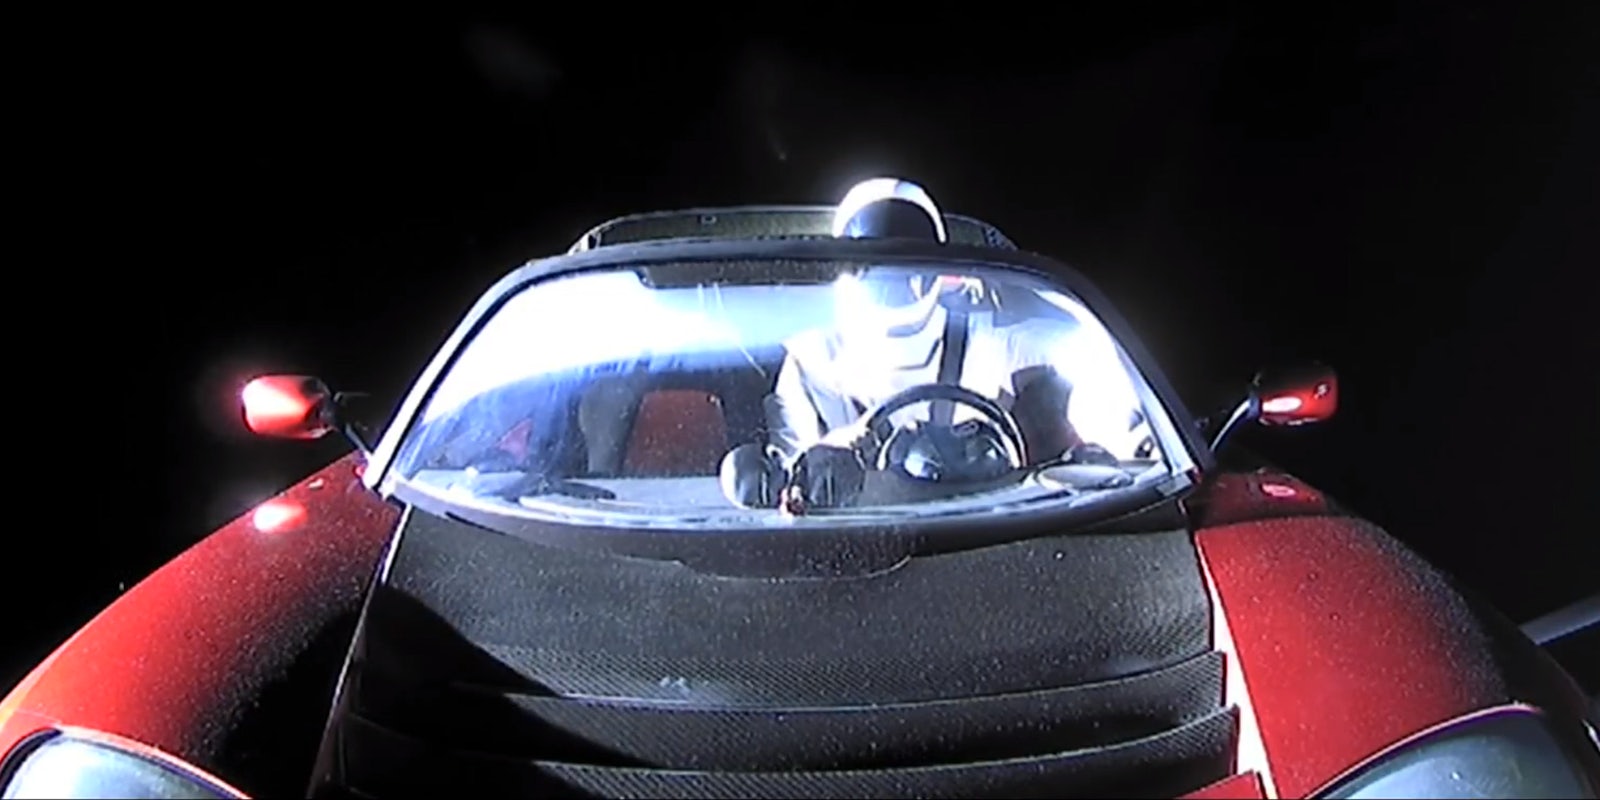 Starman in Tesla Roadster, SpaceX livestream